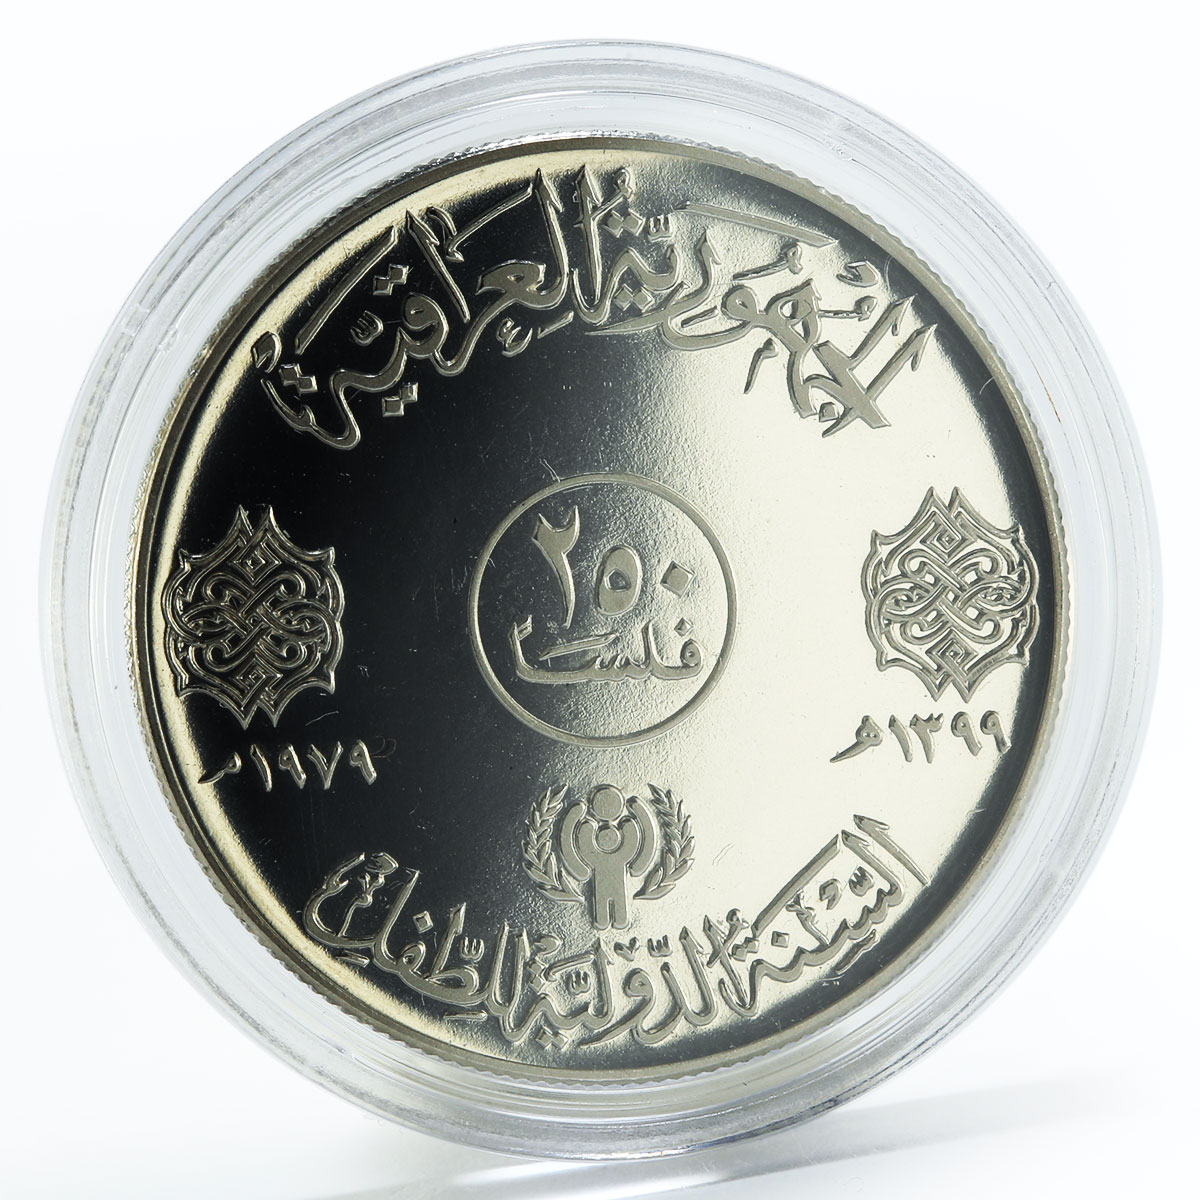 Iraq 250 fils Year of Child proof nickel coin 1979